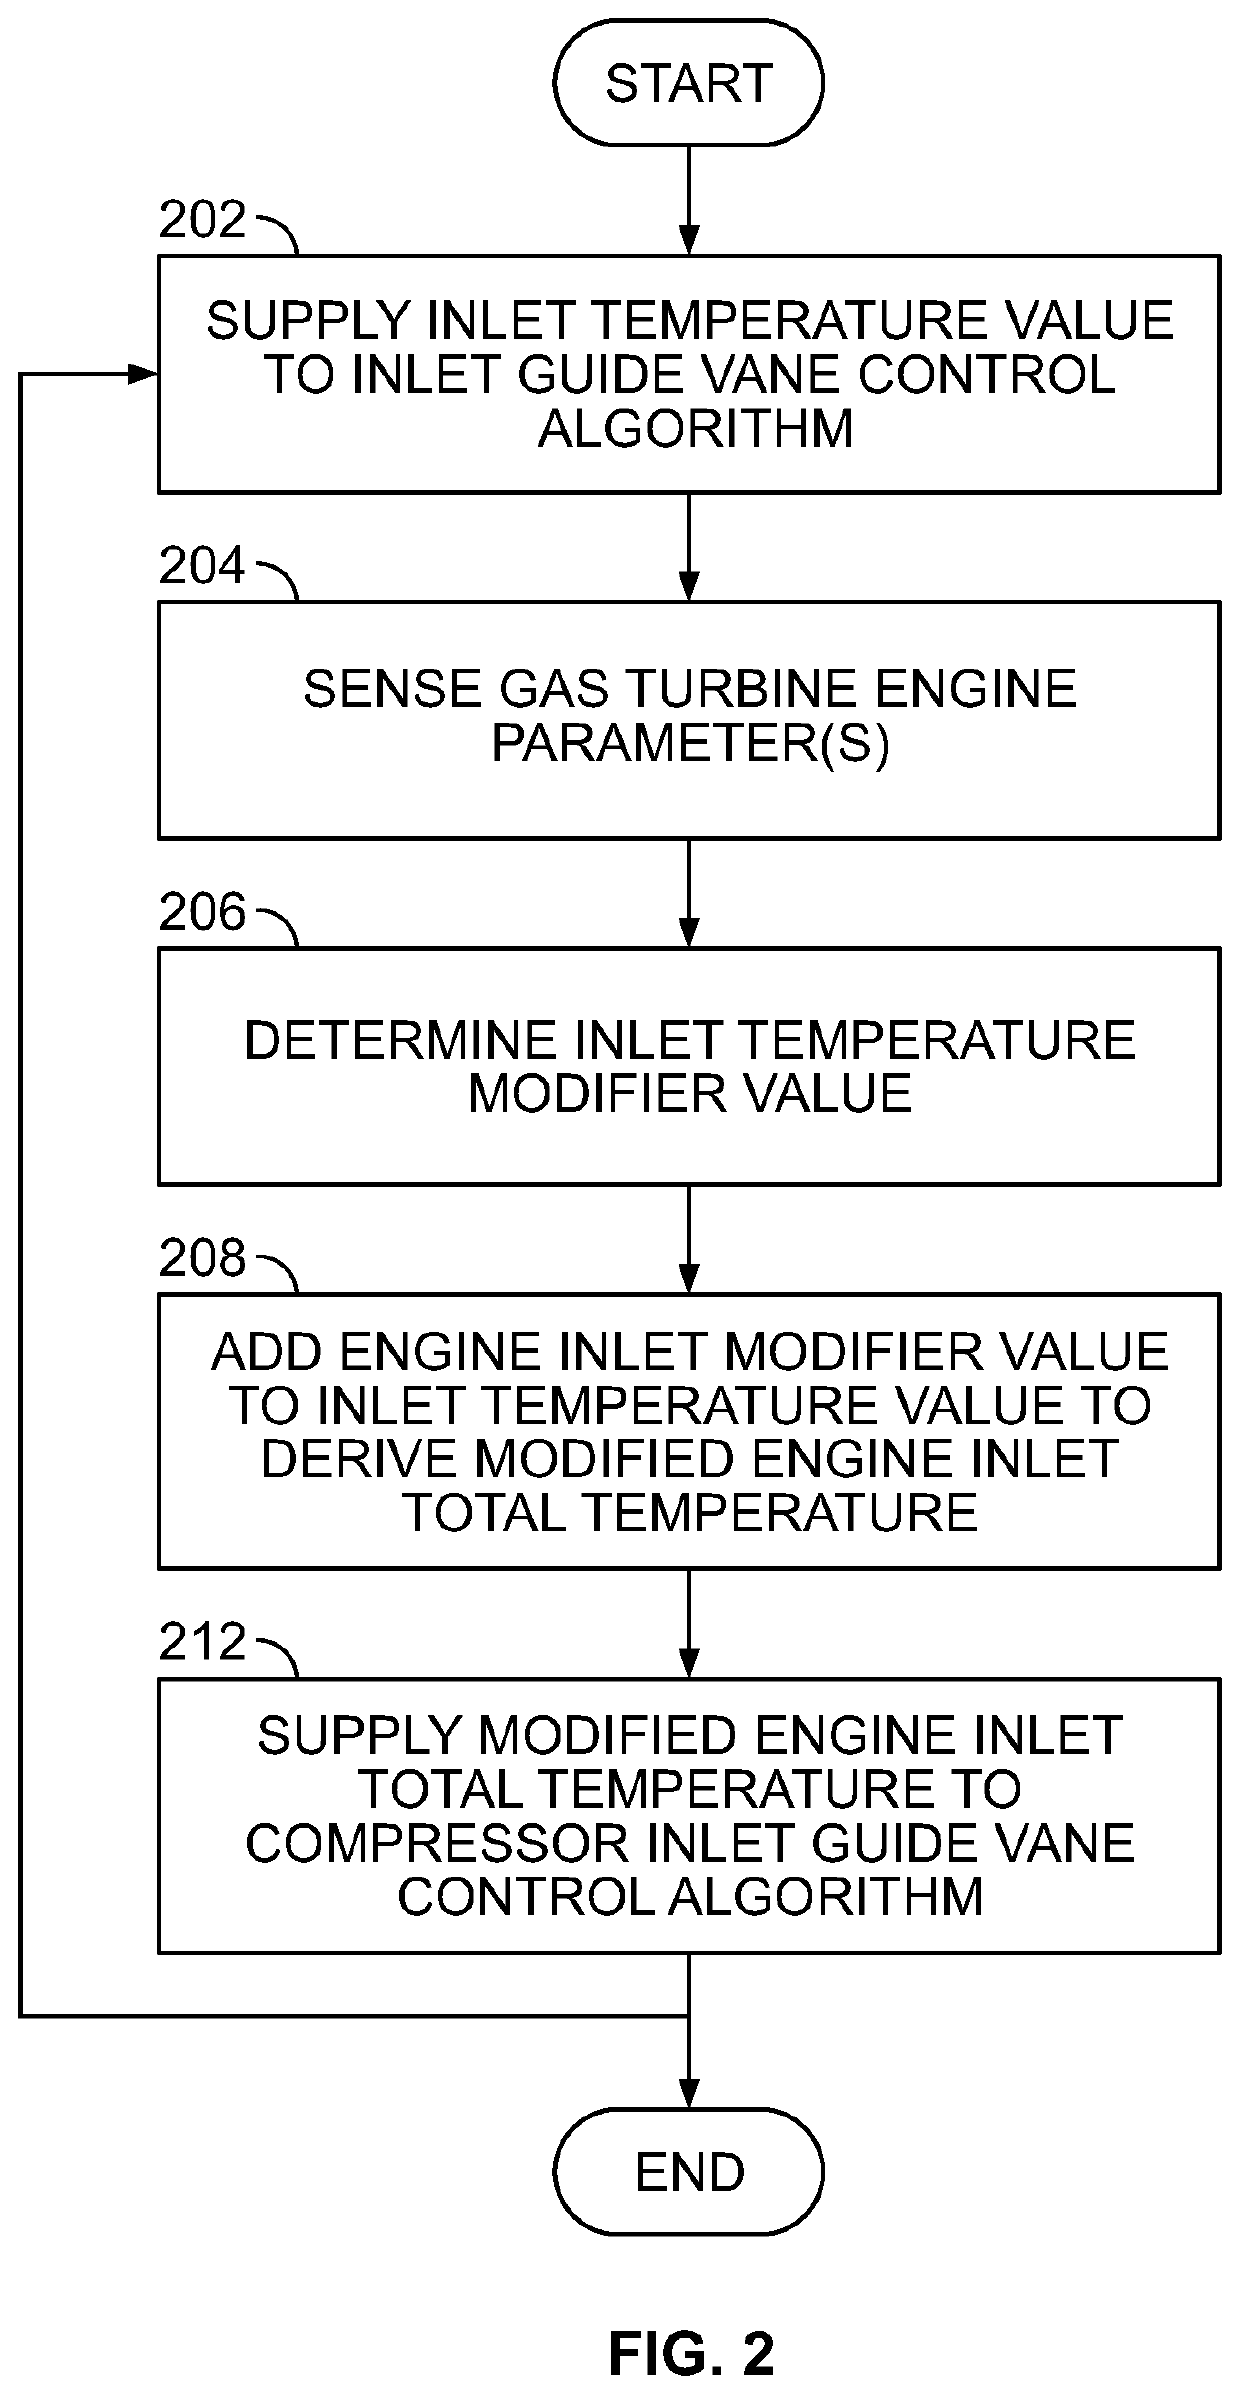 Temperature inversion detection and mitigation strategies to avoid compressor surge